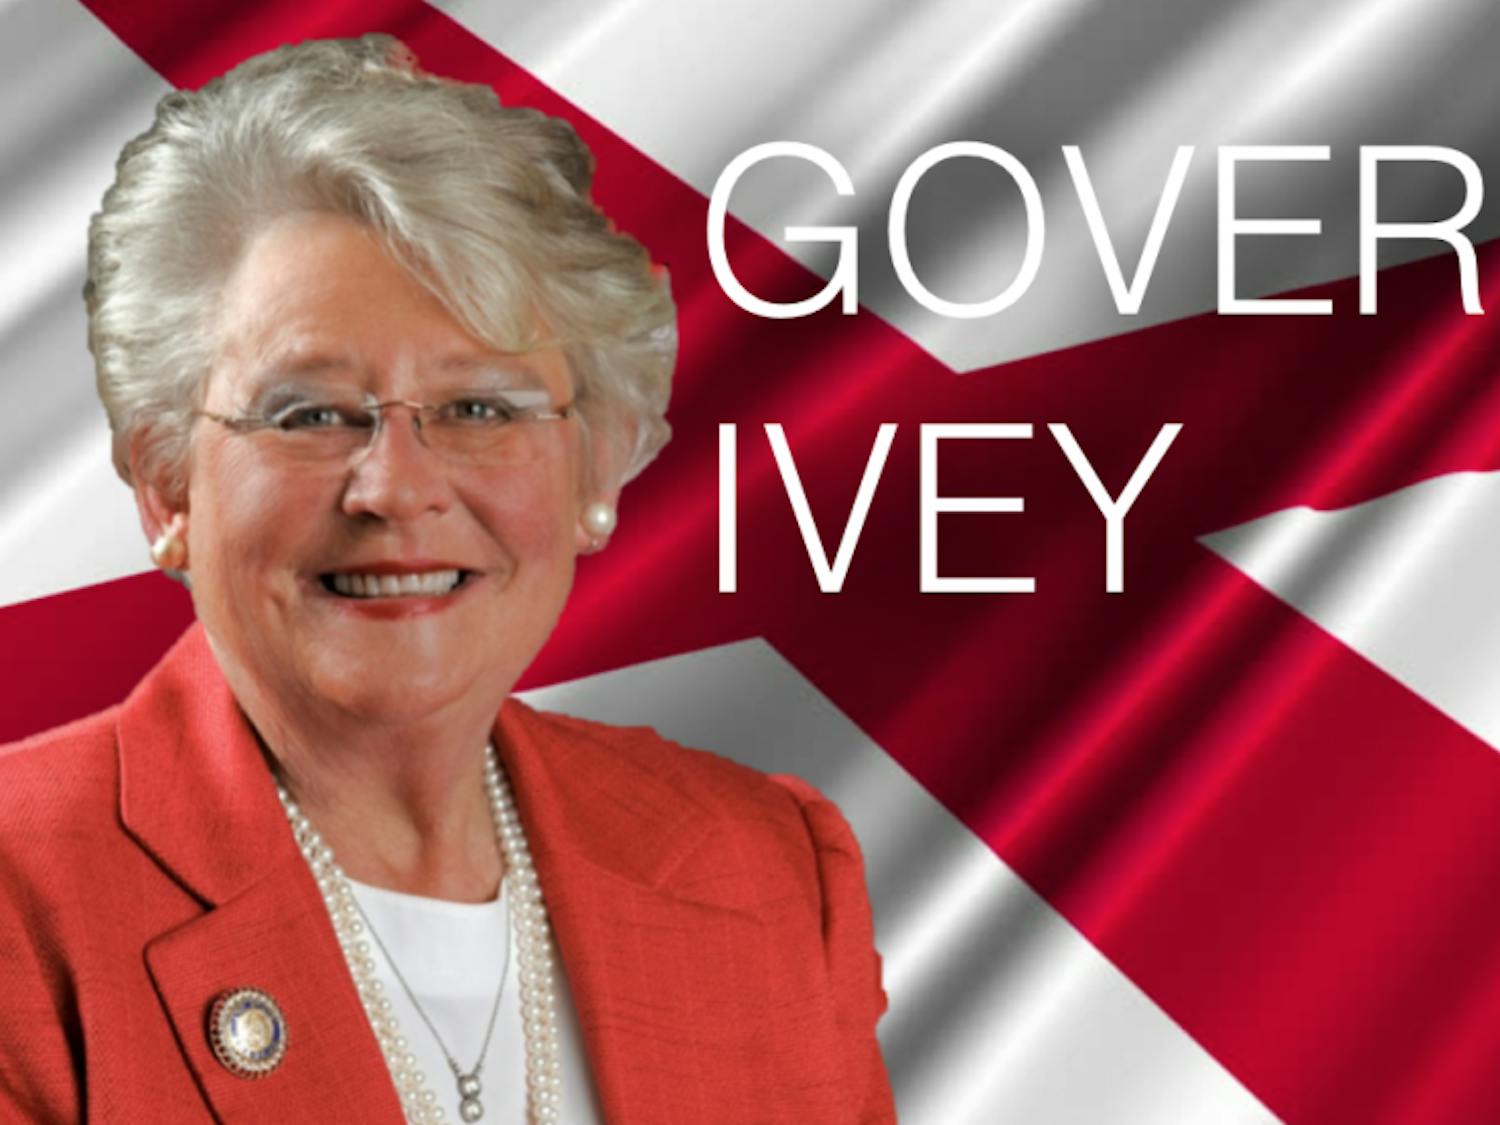 Kay Ivey - New Alabama Governor